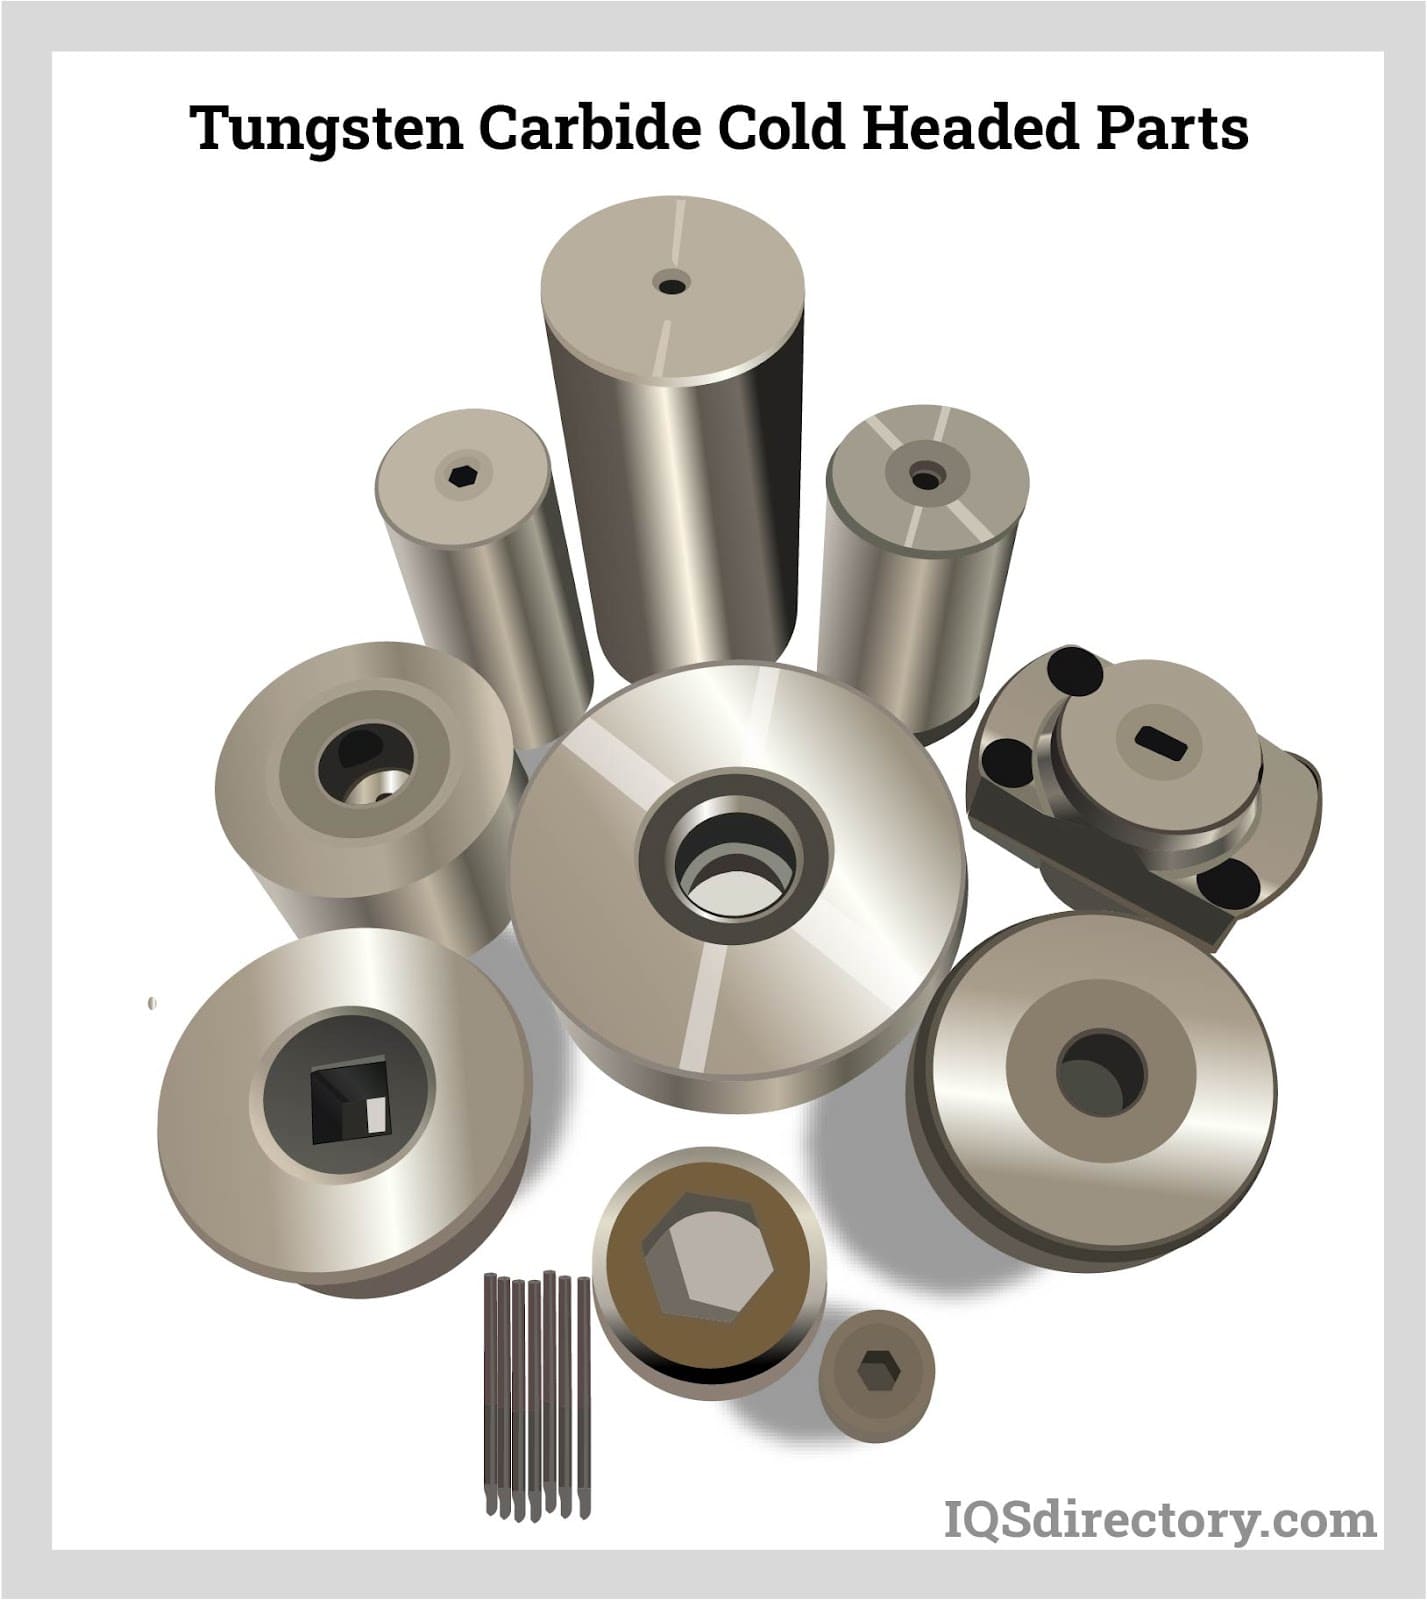 Tungsten Carbide Cold Headed Parts